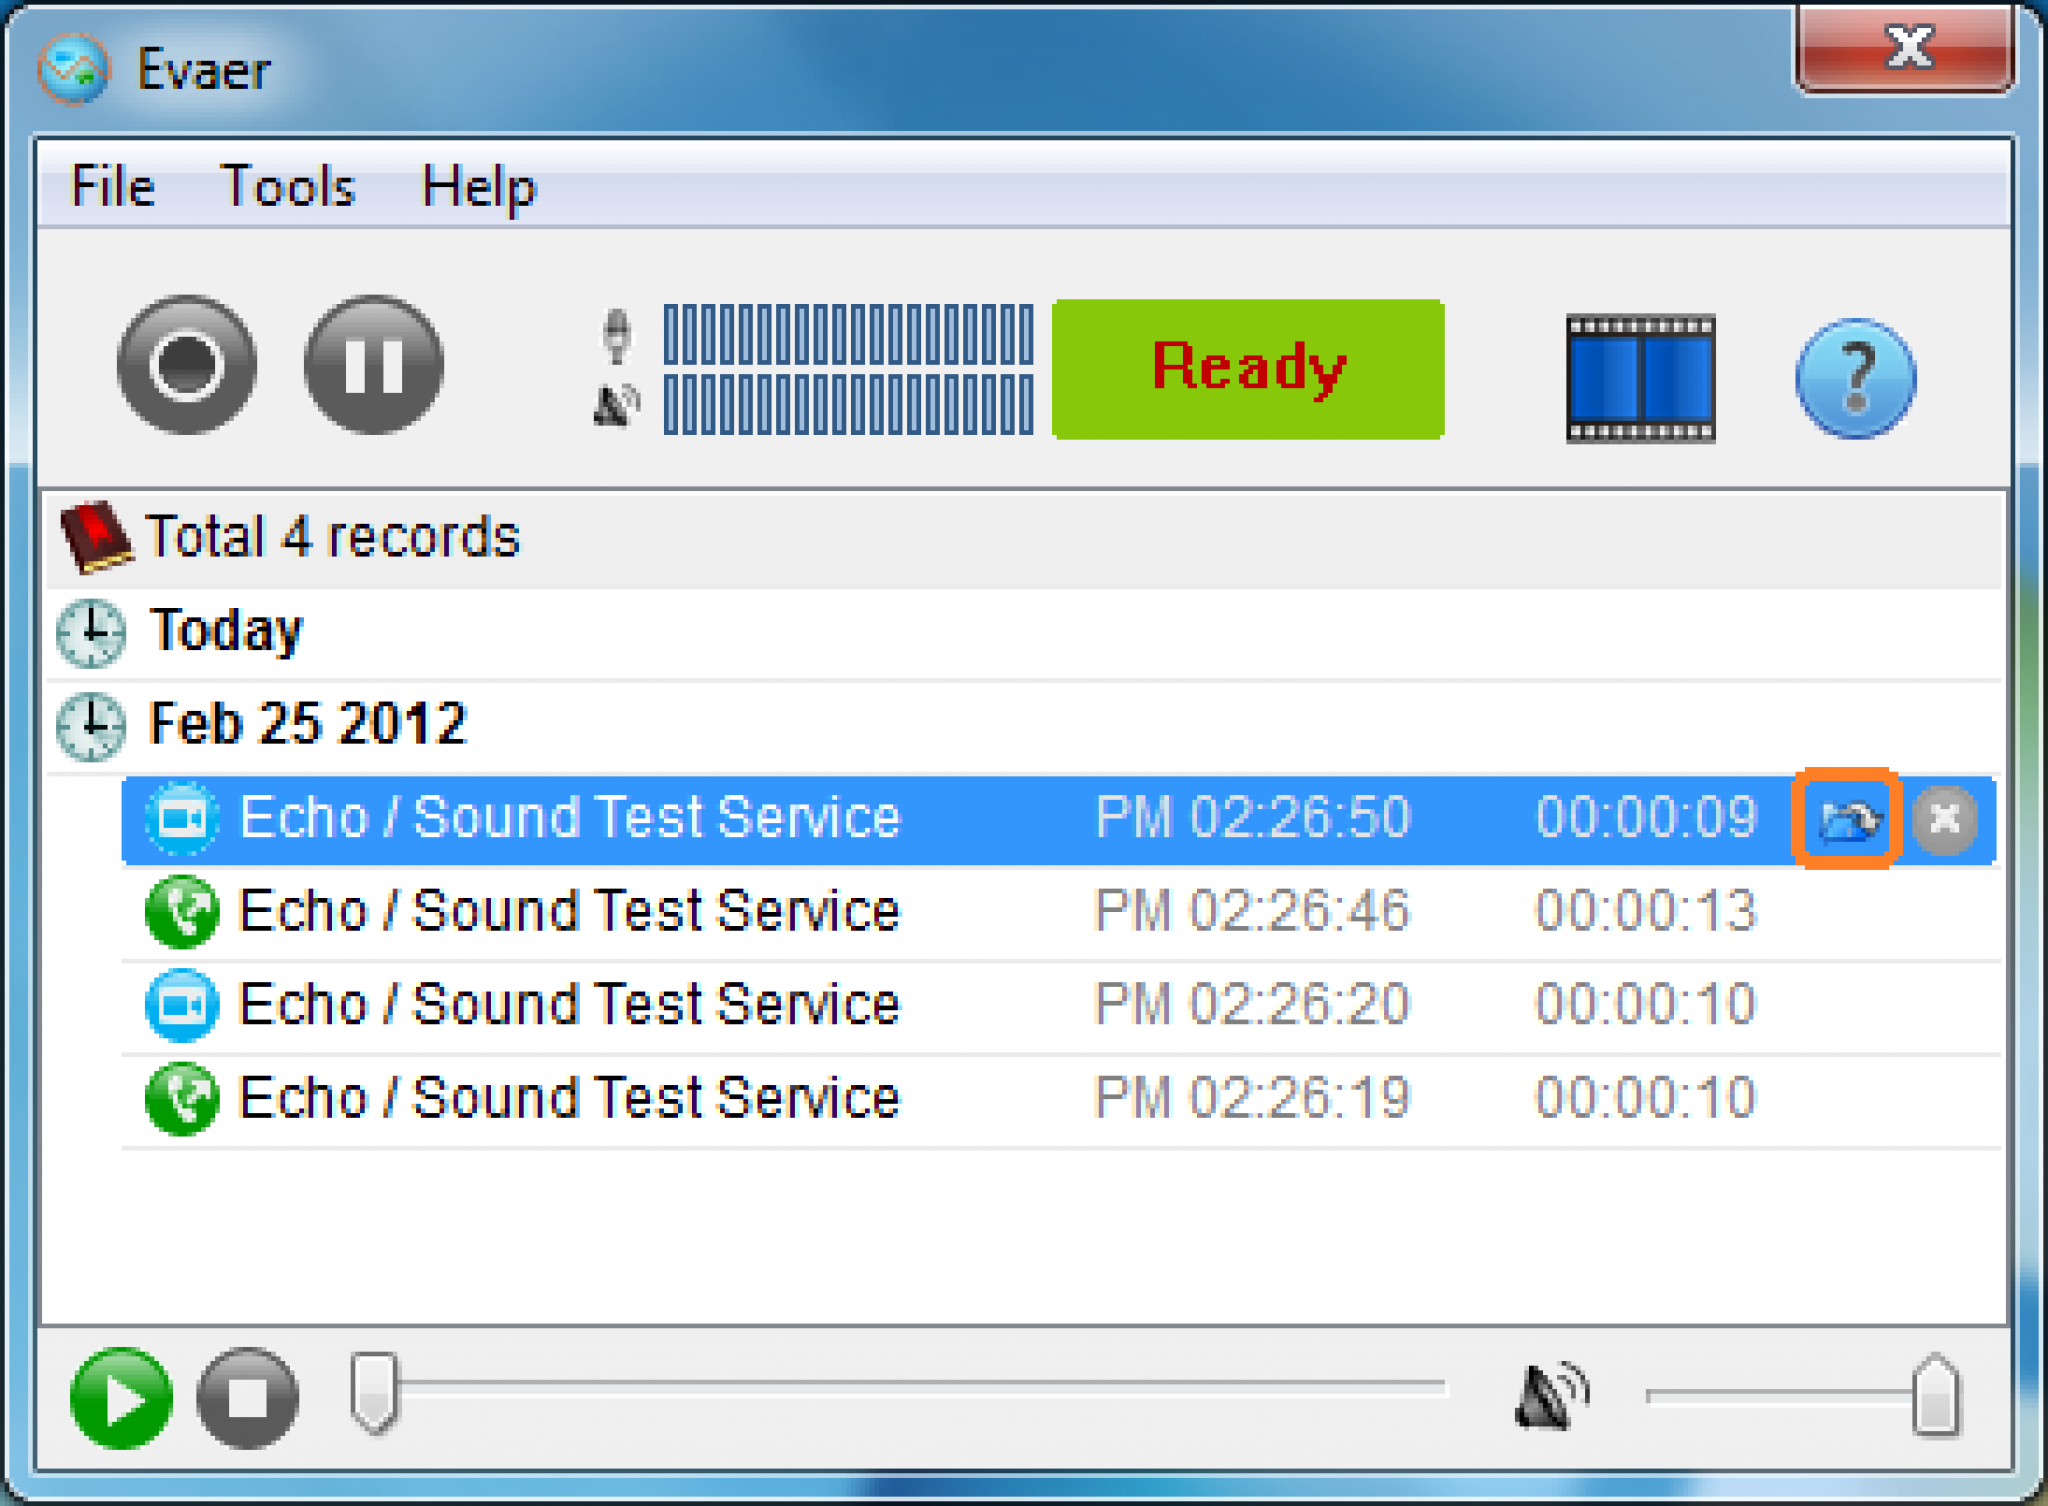 download talkhelper free skype recorder